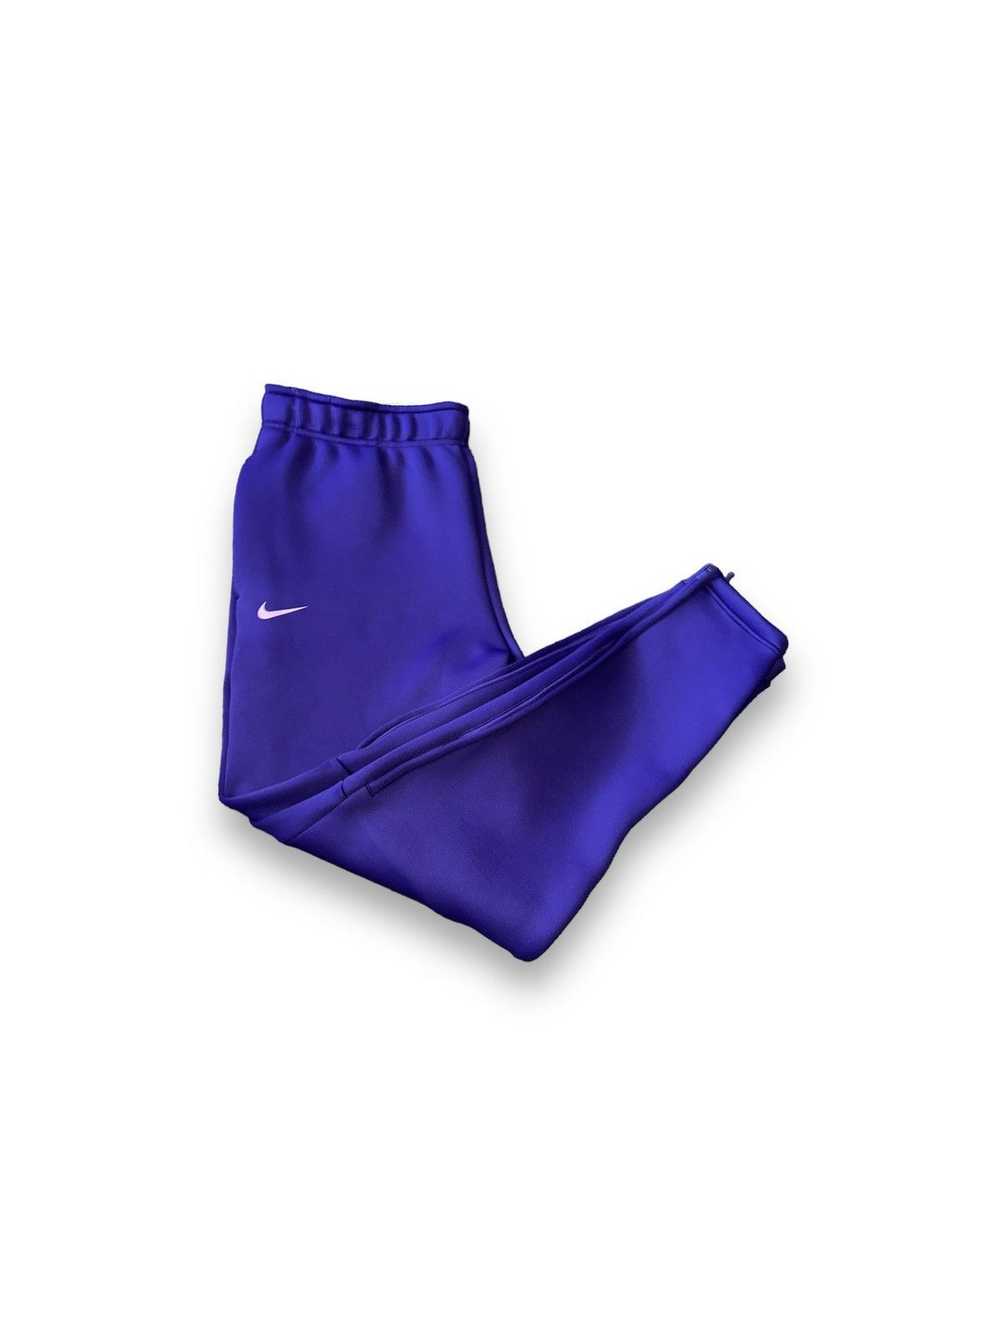 NFL × Ncaa × Nike LSU tigers x NFL Nike sweatpants - image 2